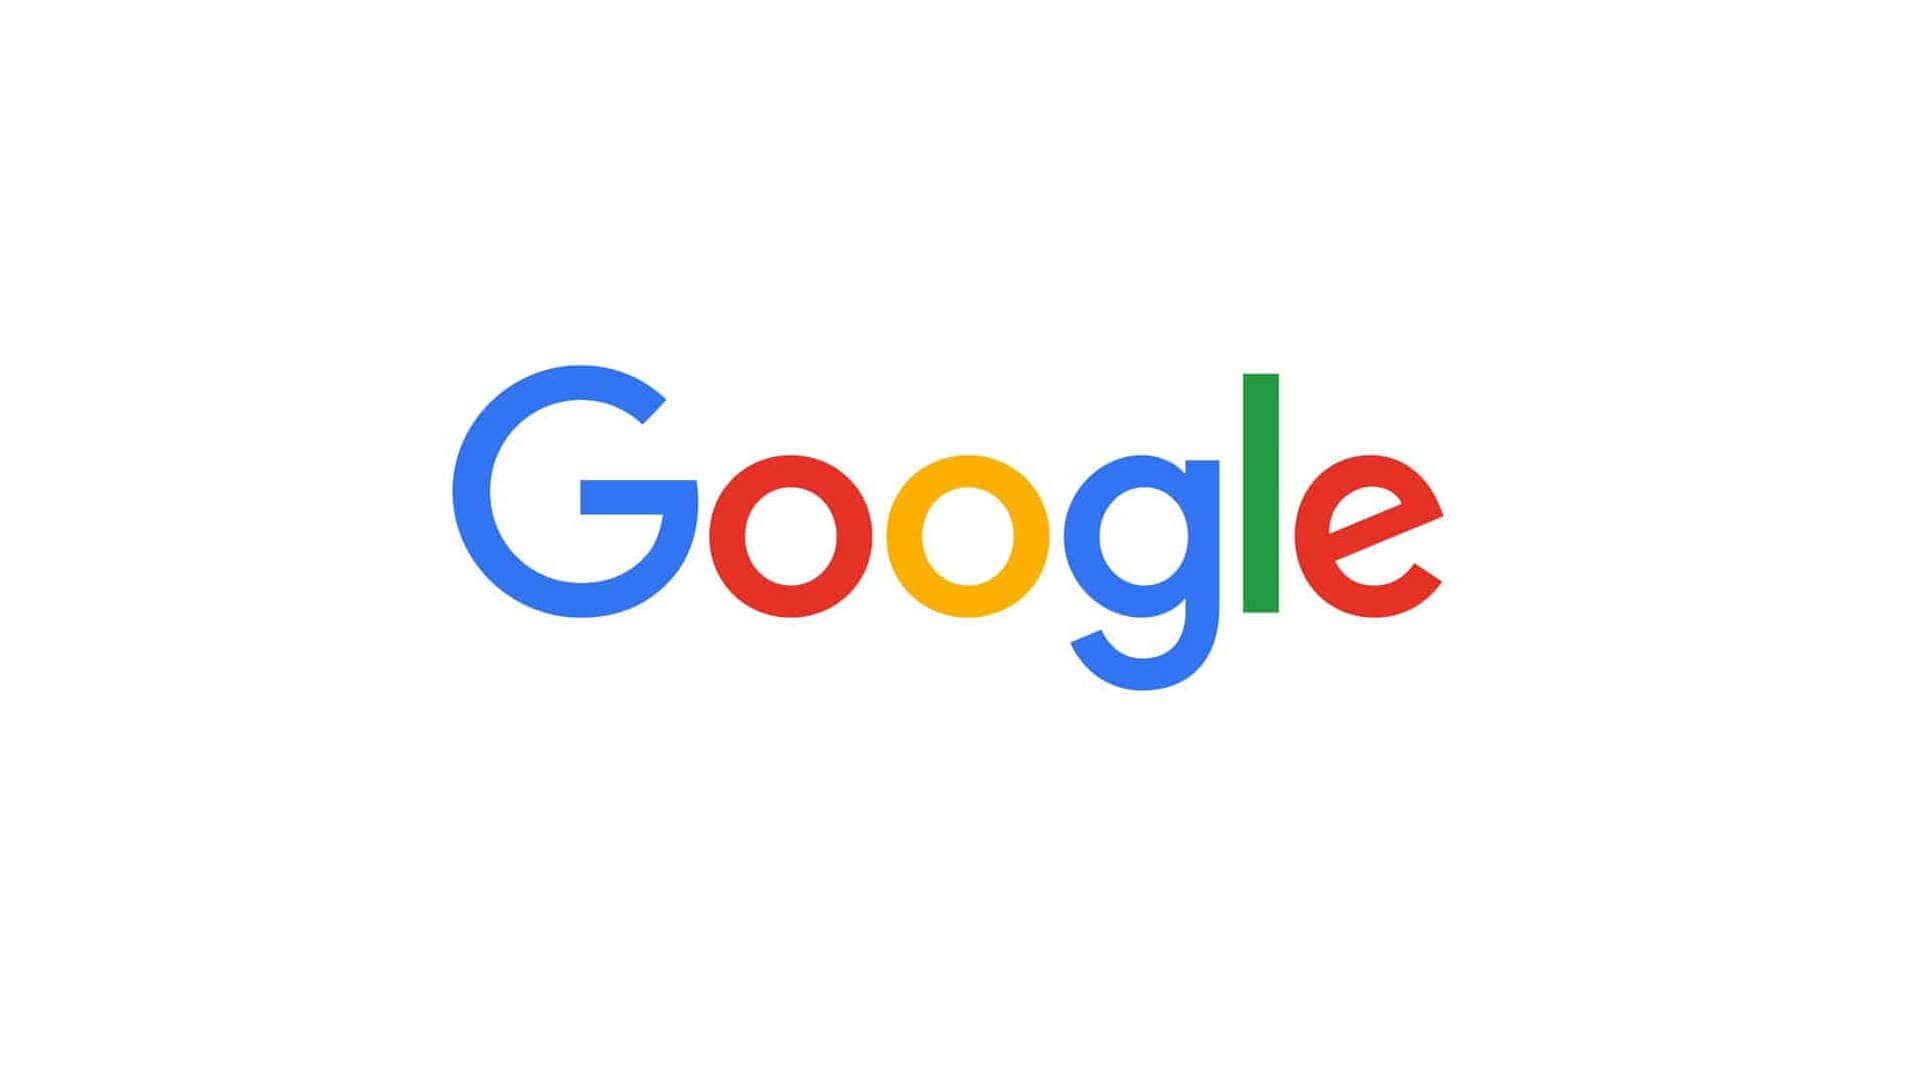 Google My Business / Unternehmensprofil: Neu mit Social Media Links erweiterbar